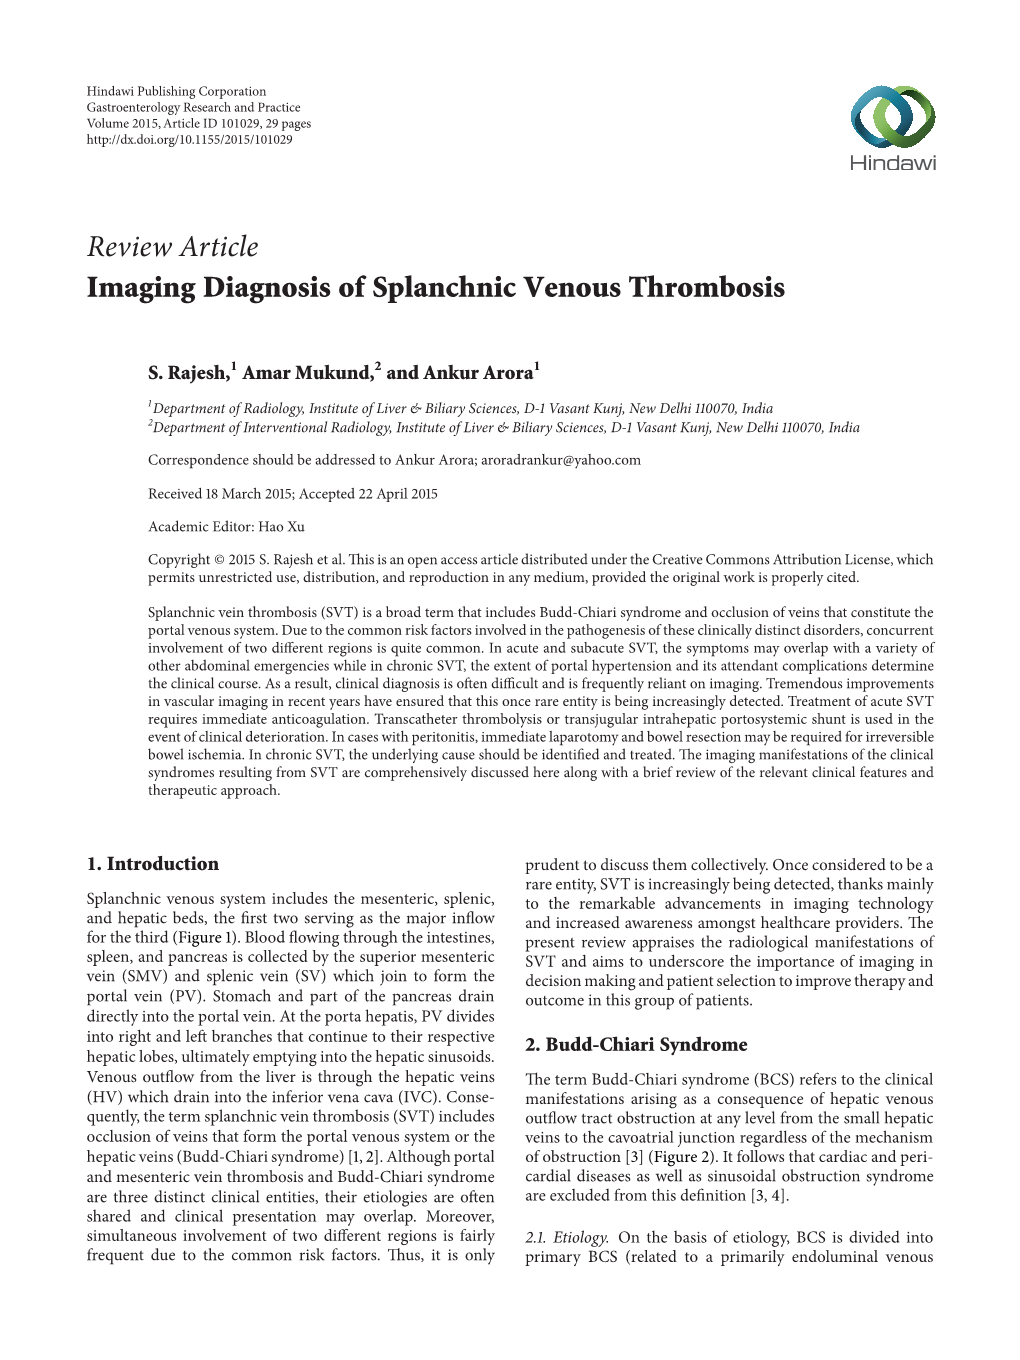 Imaging Diagnosis of Splanchnic Venous Thrombosis